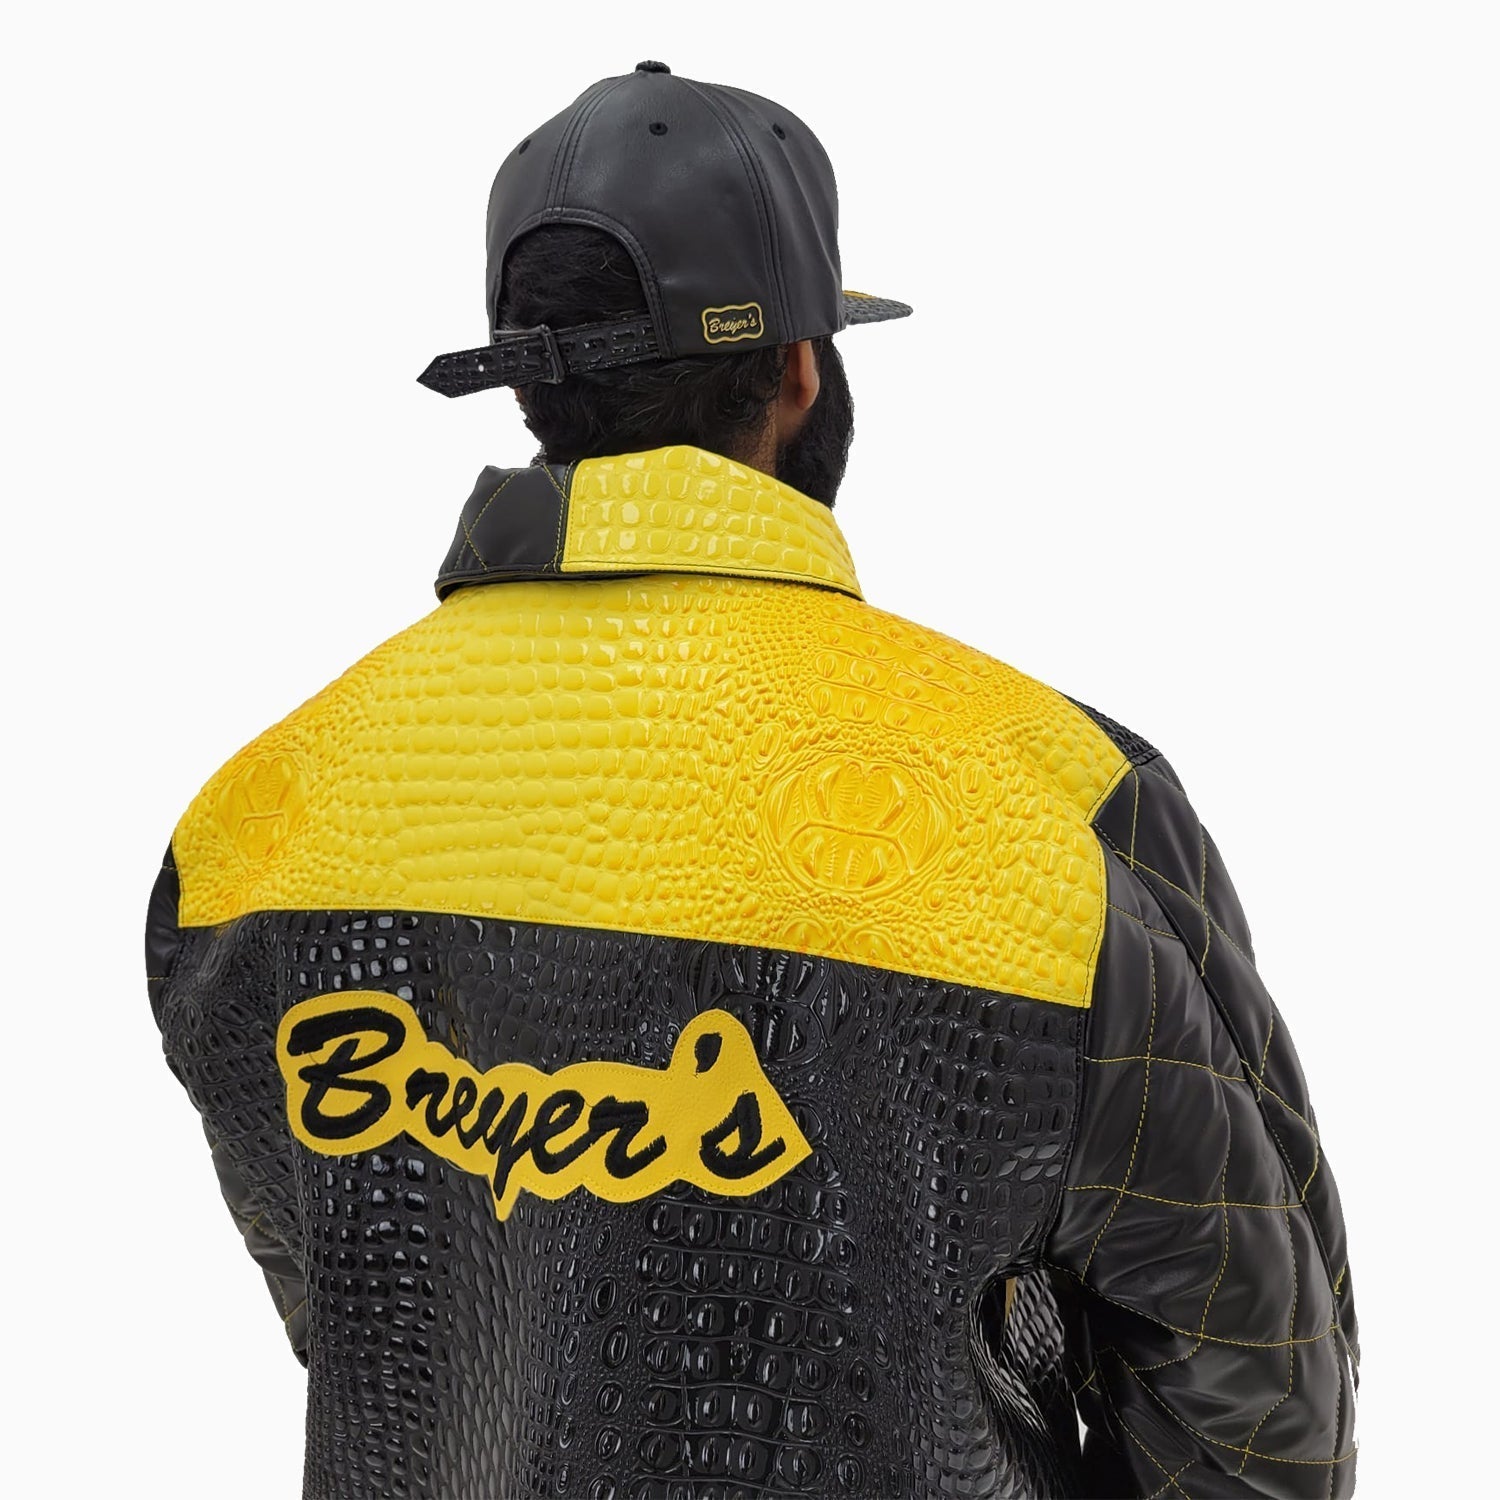 breyers-black-edition-leather-jacket-bjbe-blkylw